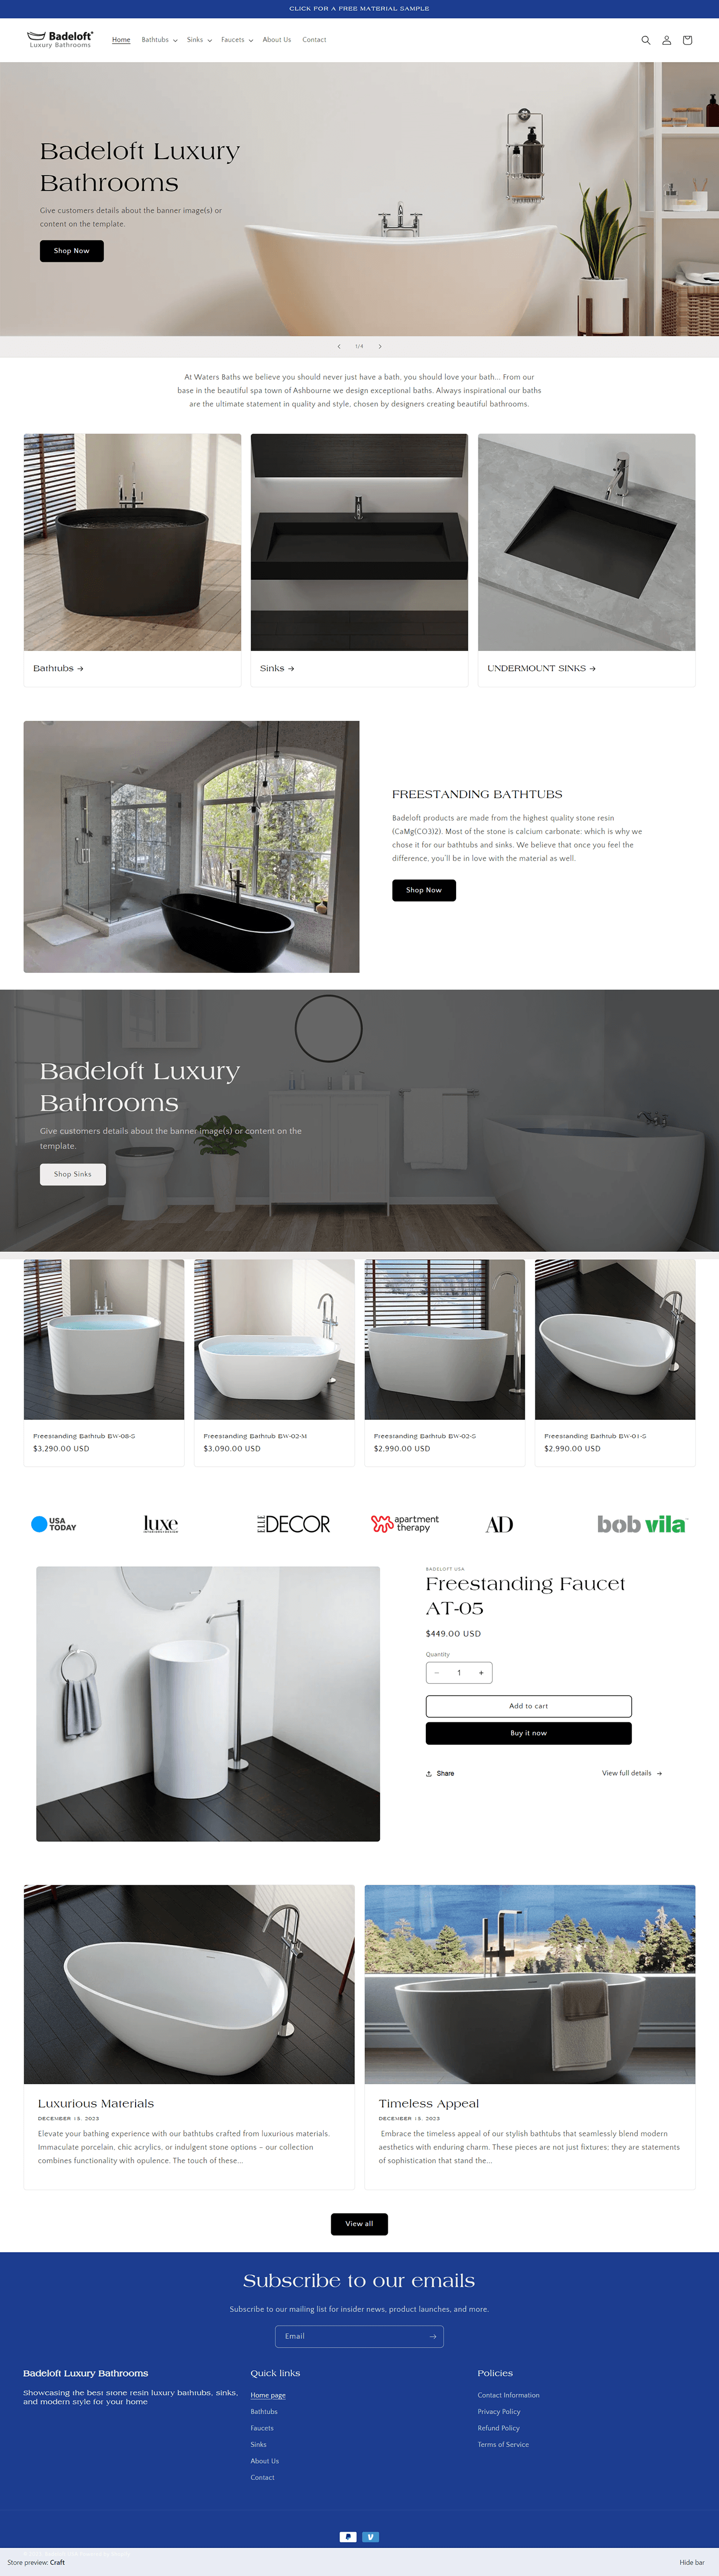 Bathroom accessories Web Design  landing page ui design Bathroom Website Design sinks & taps tabs website